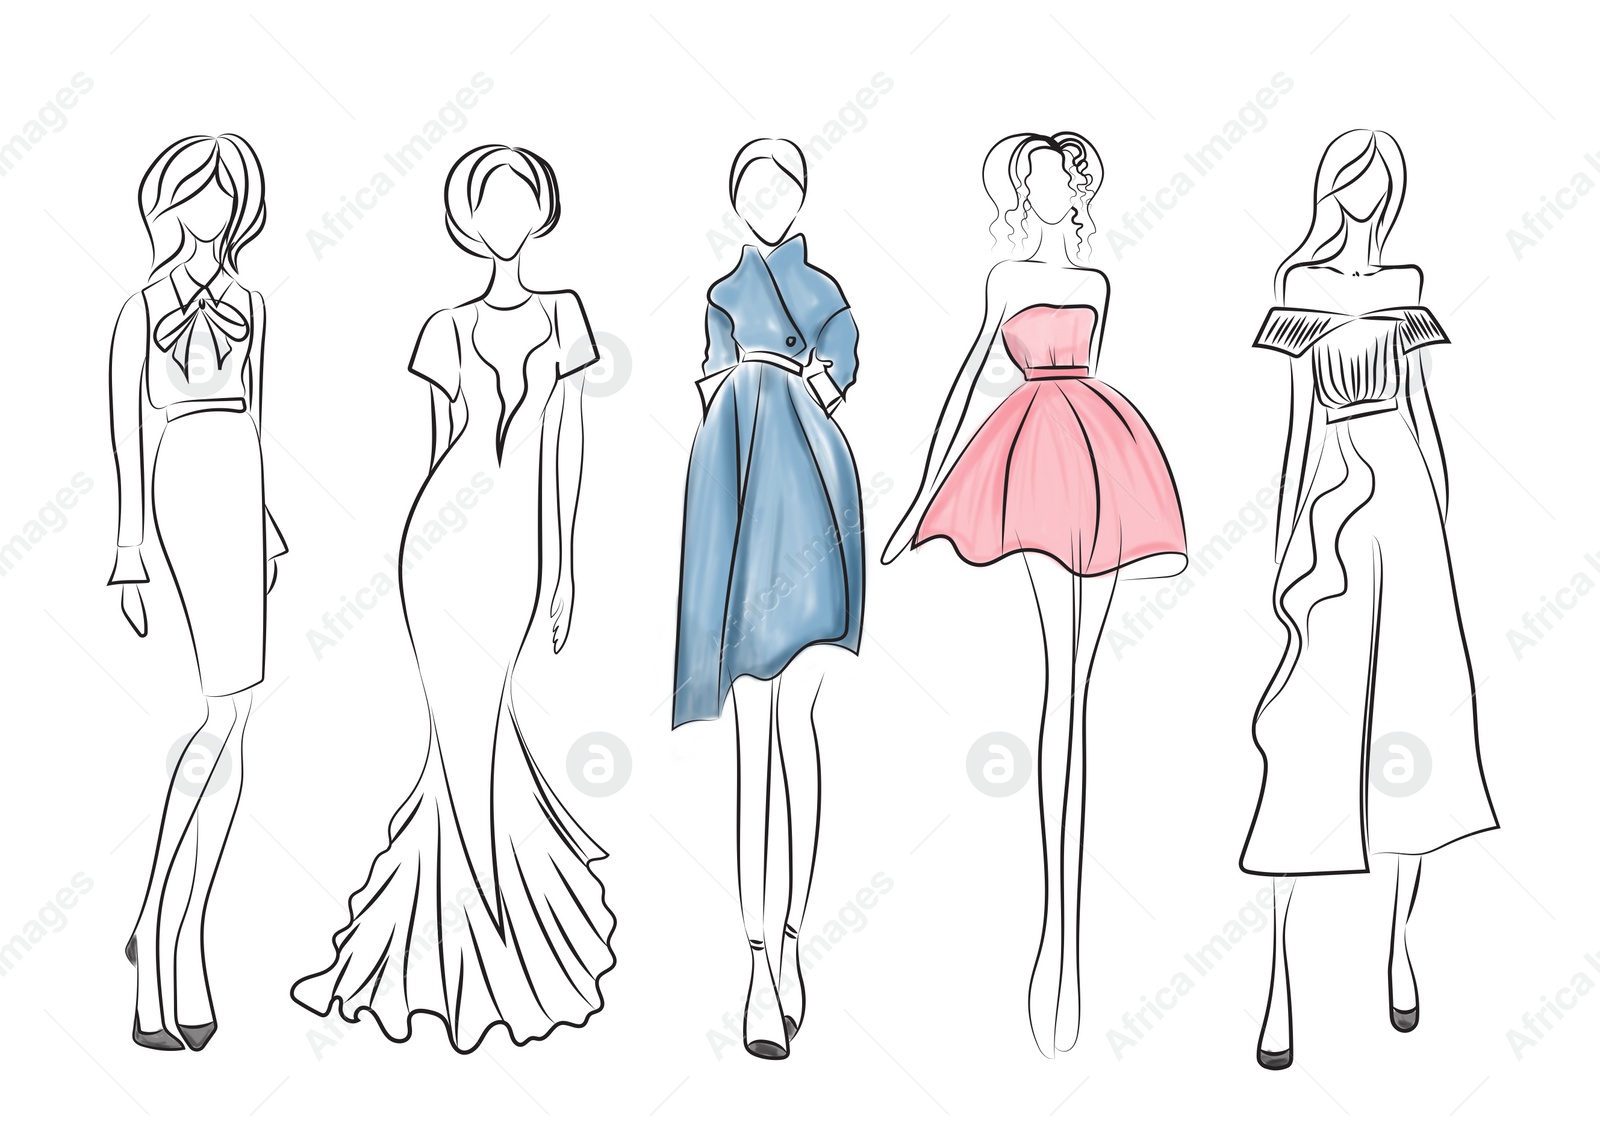 Illustration of Fashion sketch. Models wearing stylish clothes on white background, illustration